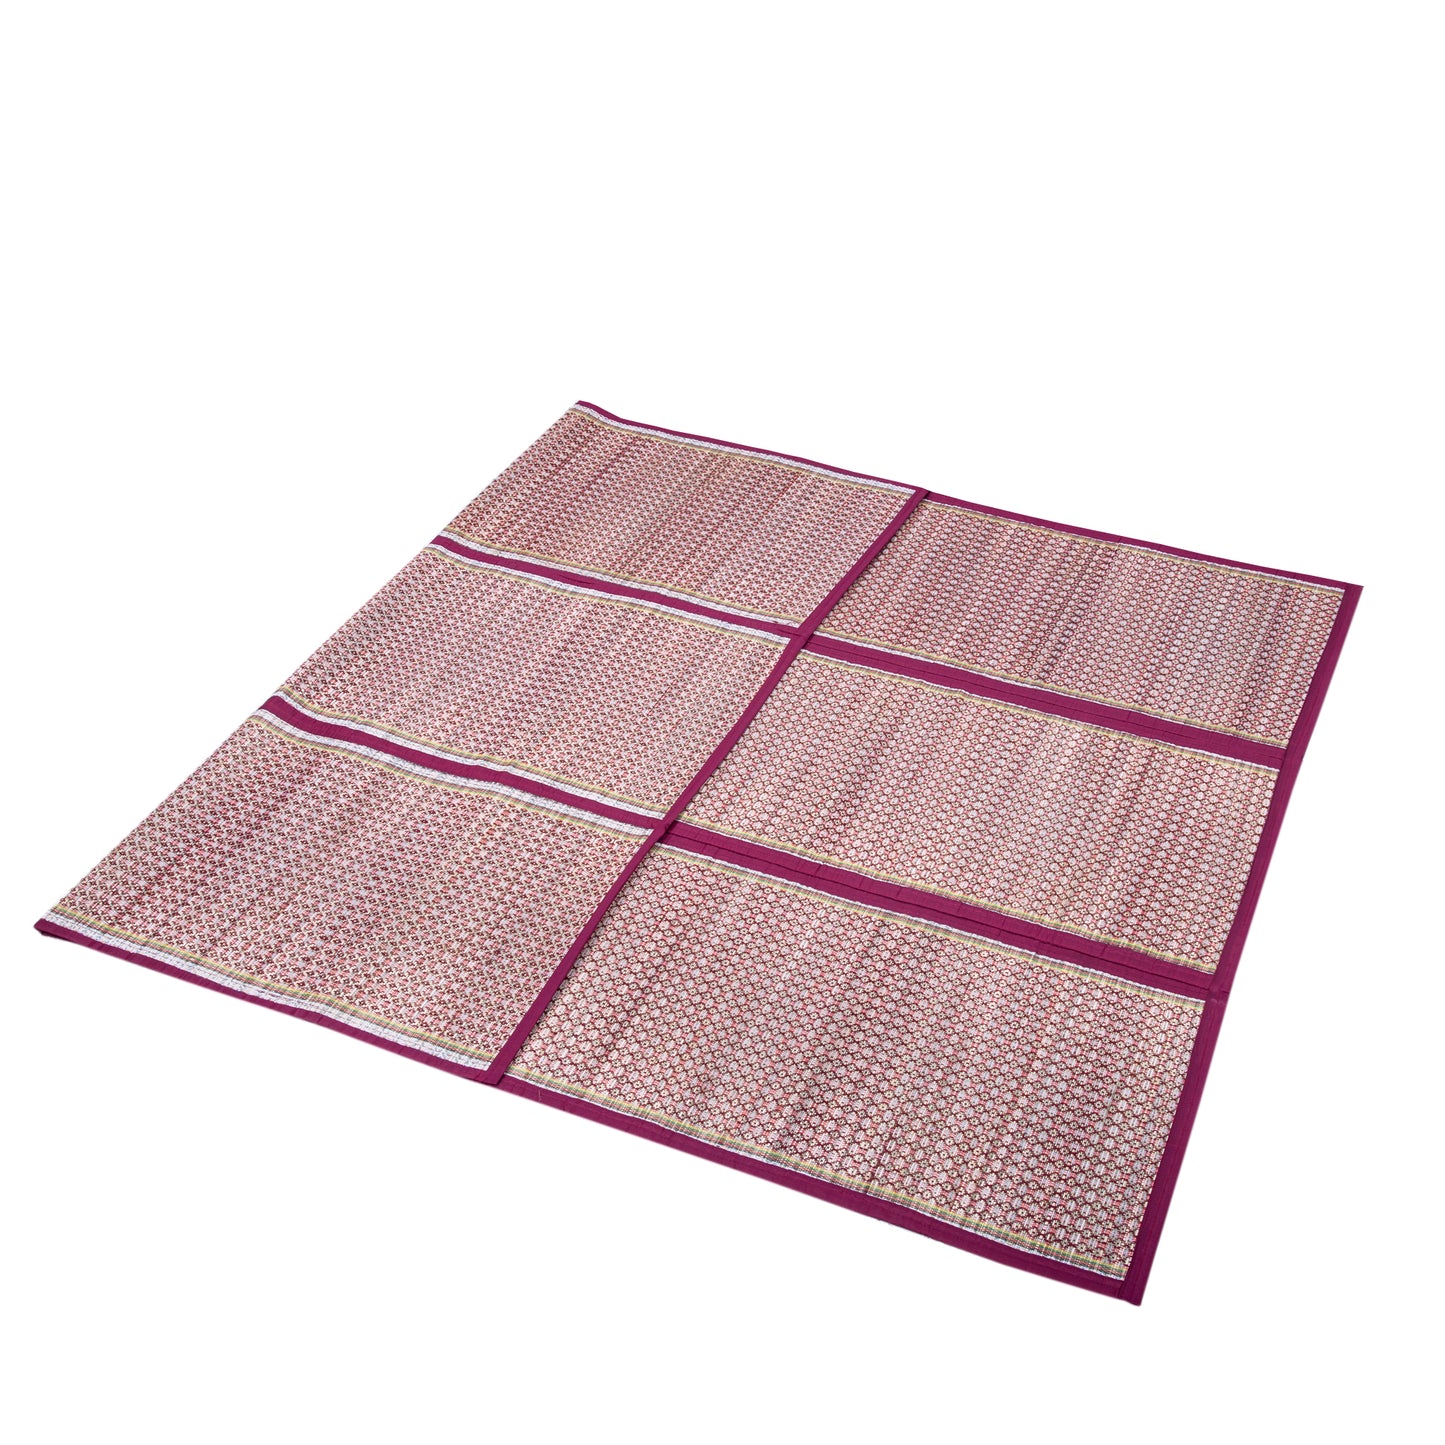 Designer Organic Chatai Mat Foldable made of Madurkathi Grass for Sleeping, Sitting on Floor - T3-38